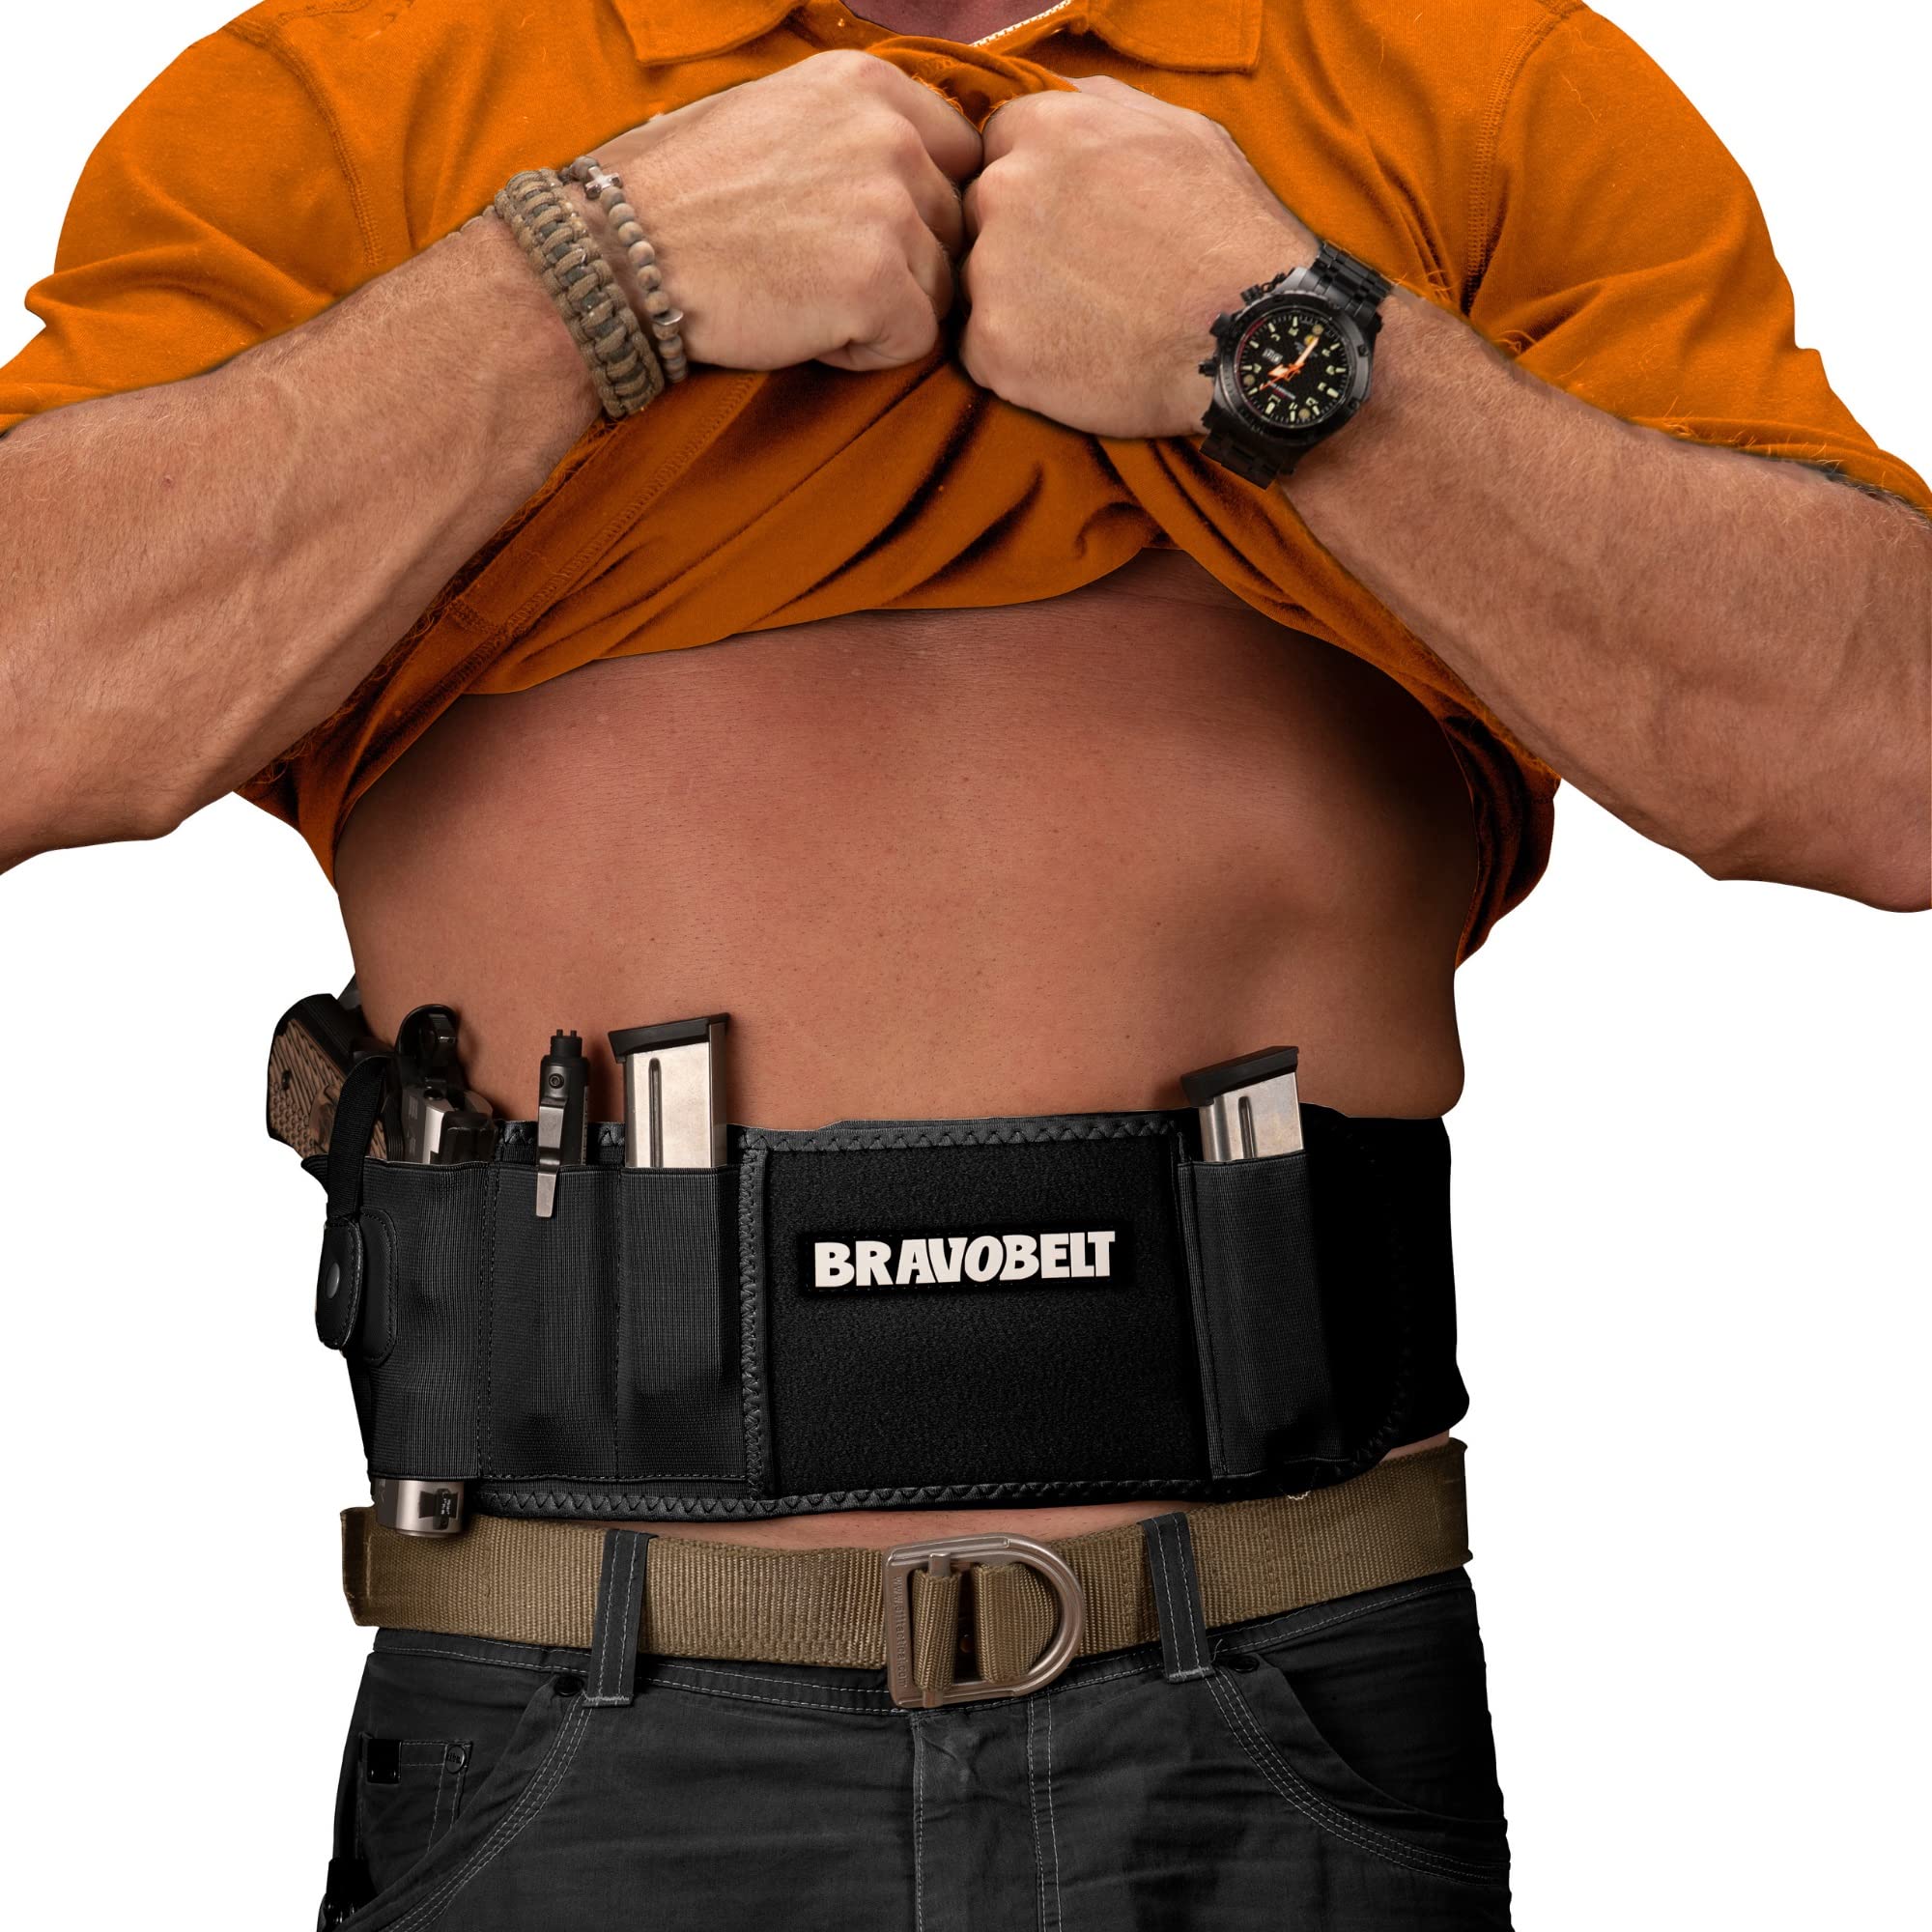 BRAVOBELT Belly Band Holster for Concealed Carry - Athletic Flex